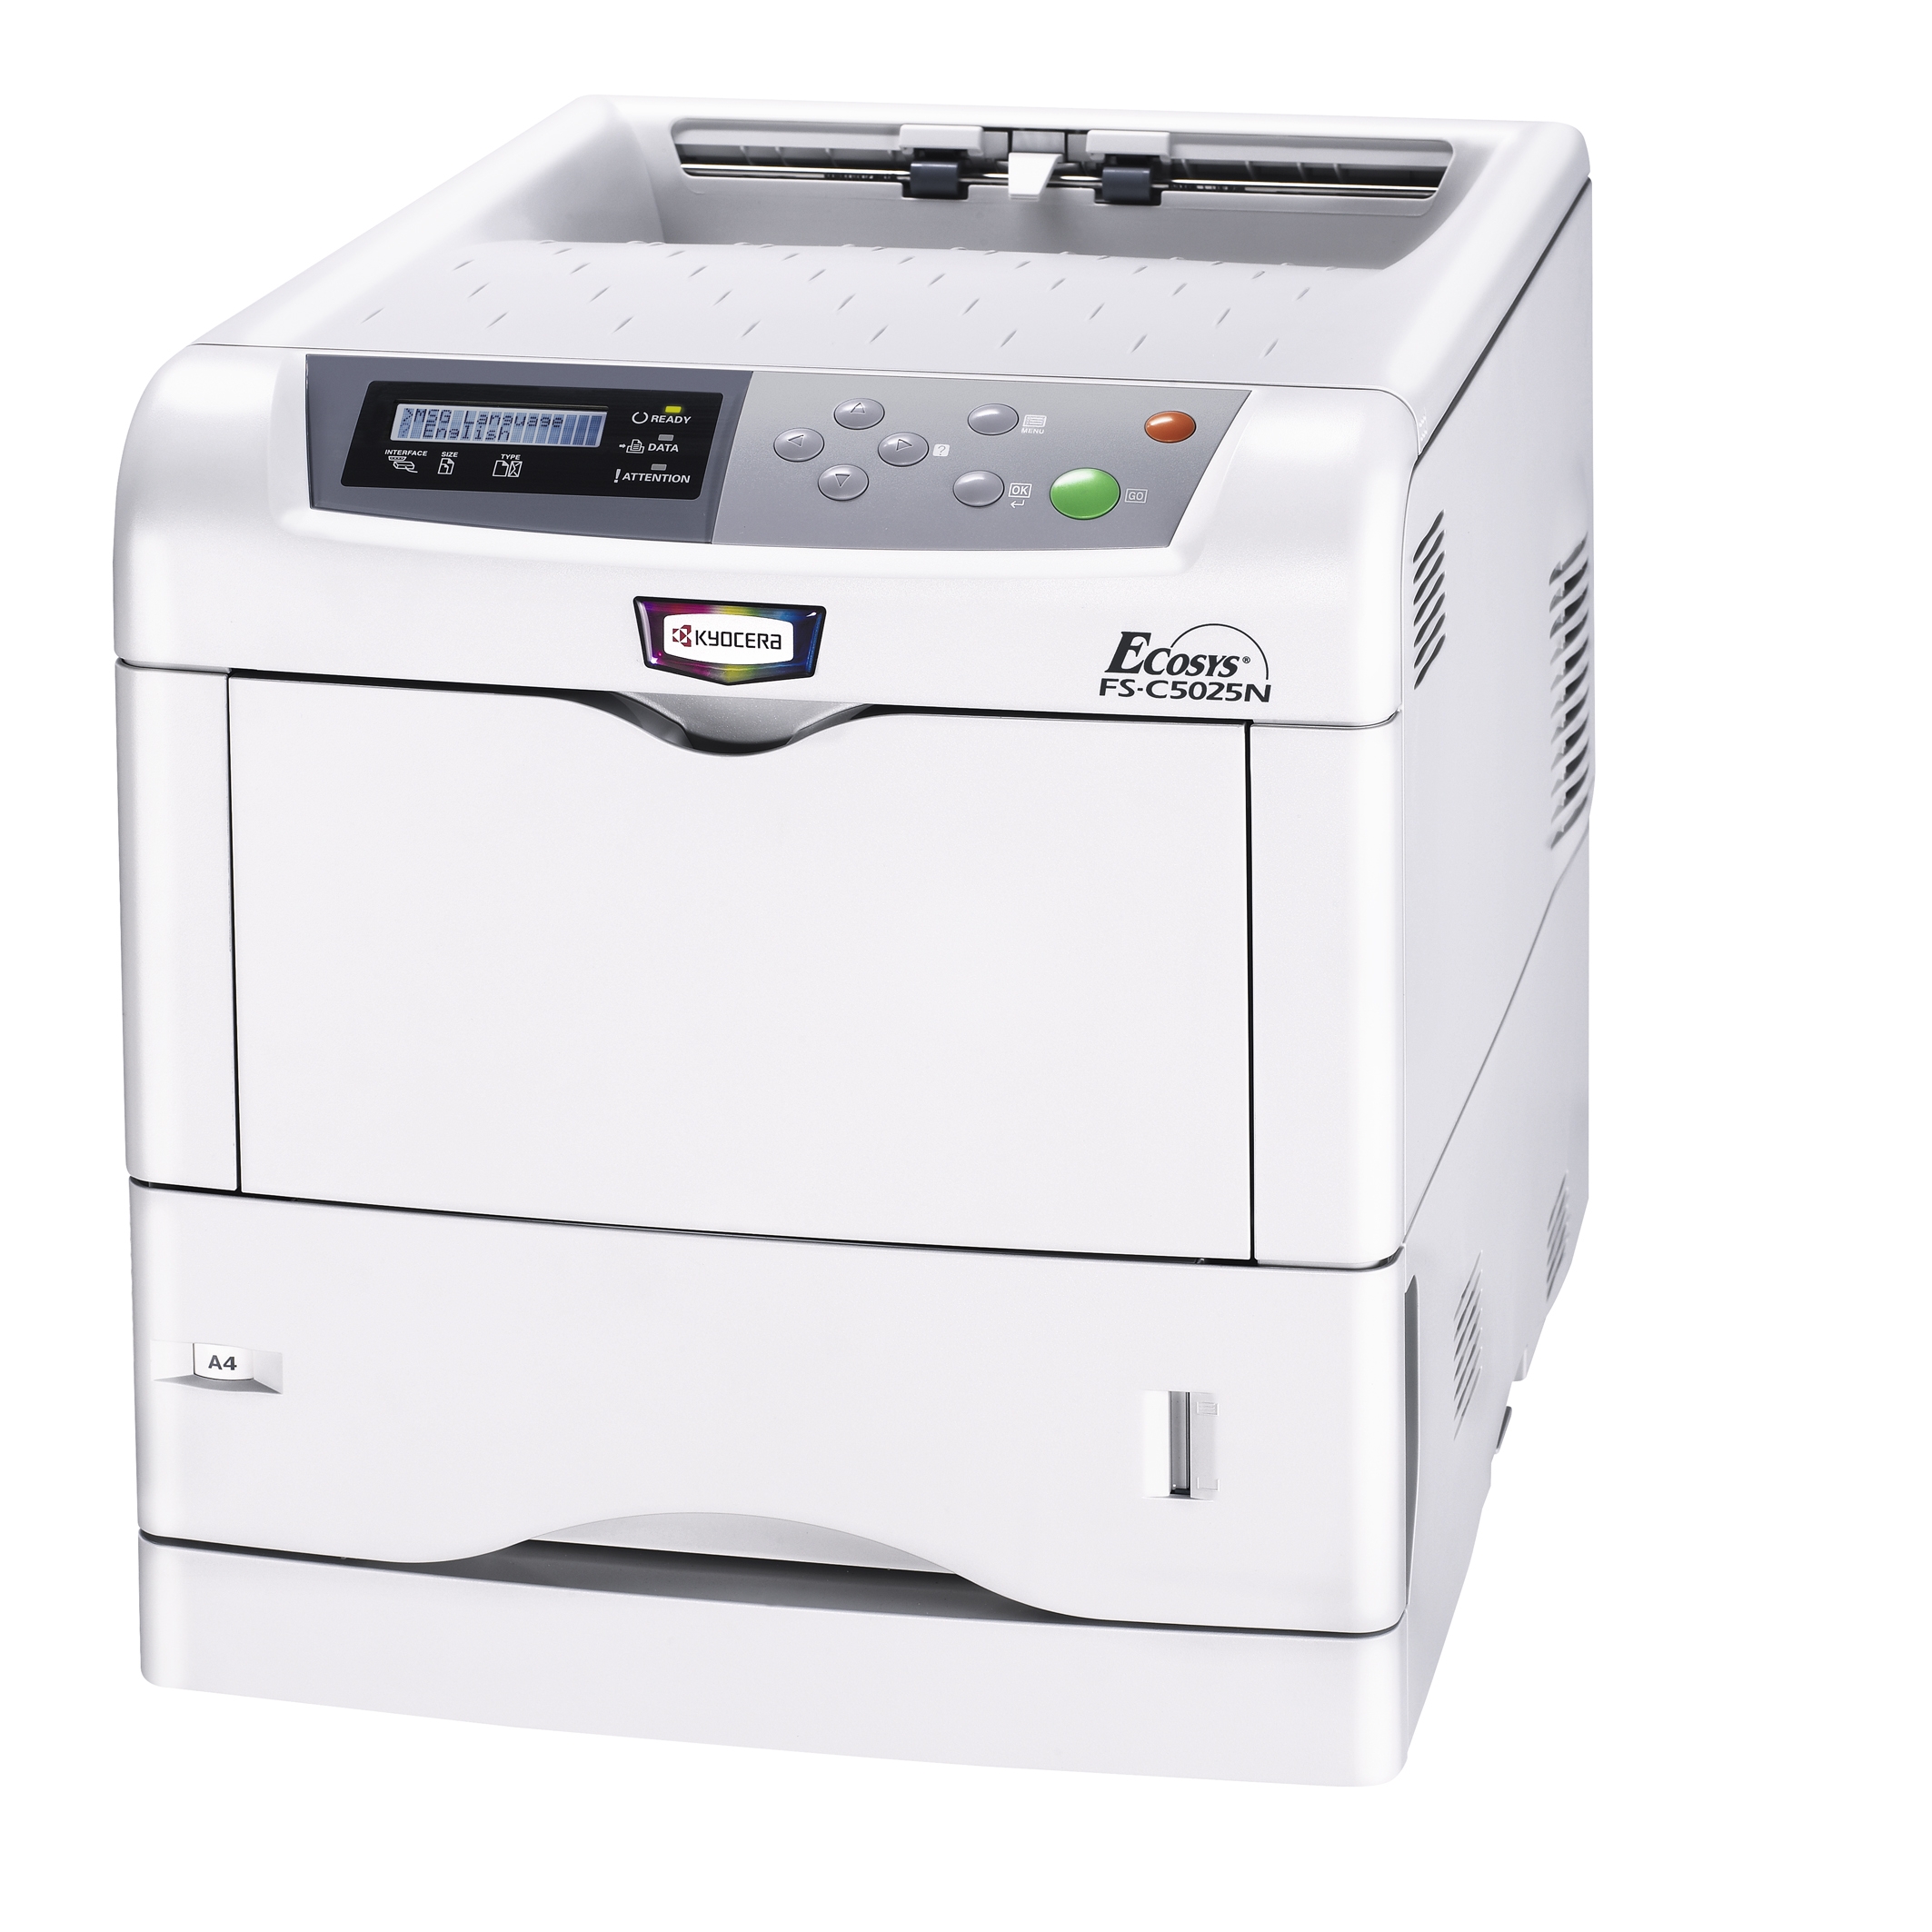 Заправка картриджа принтера Kyocera FS 5025N